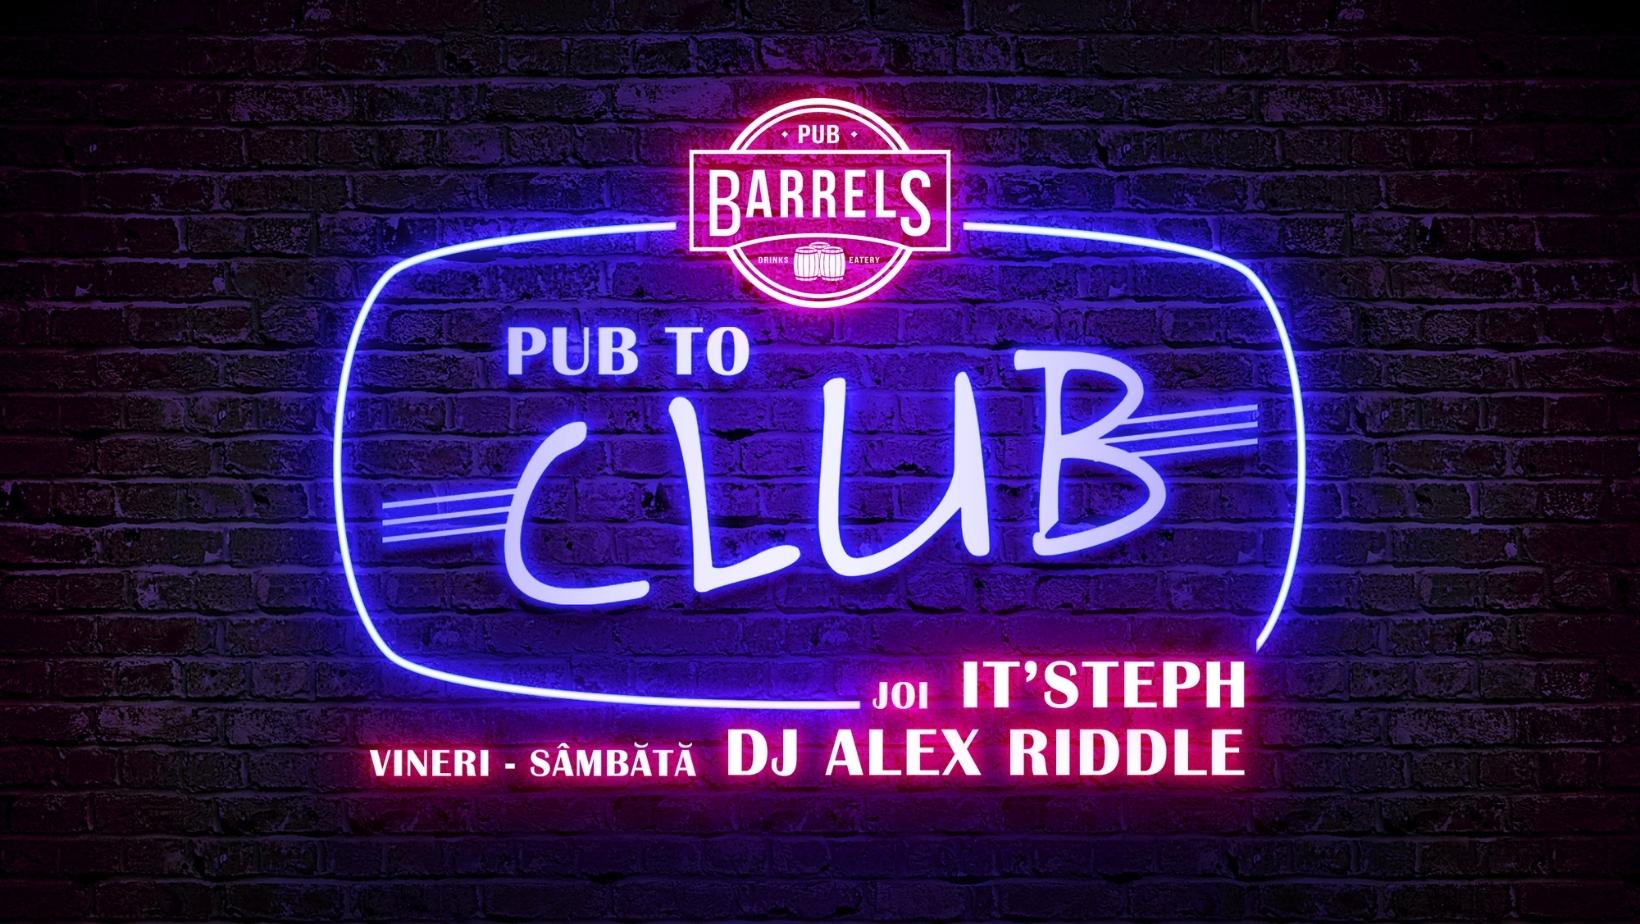 Pub To Club is Back